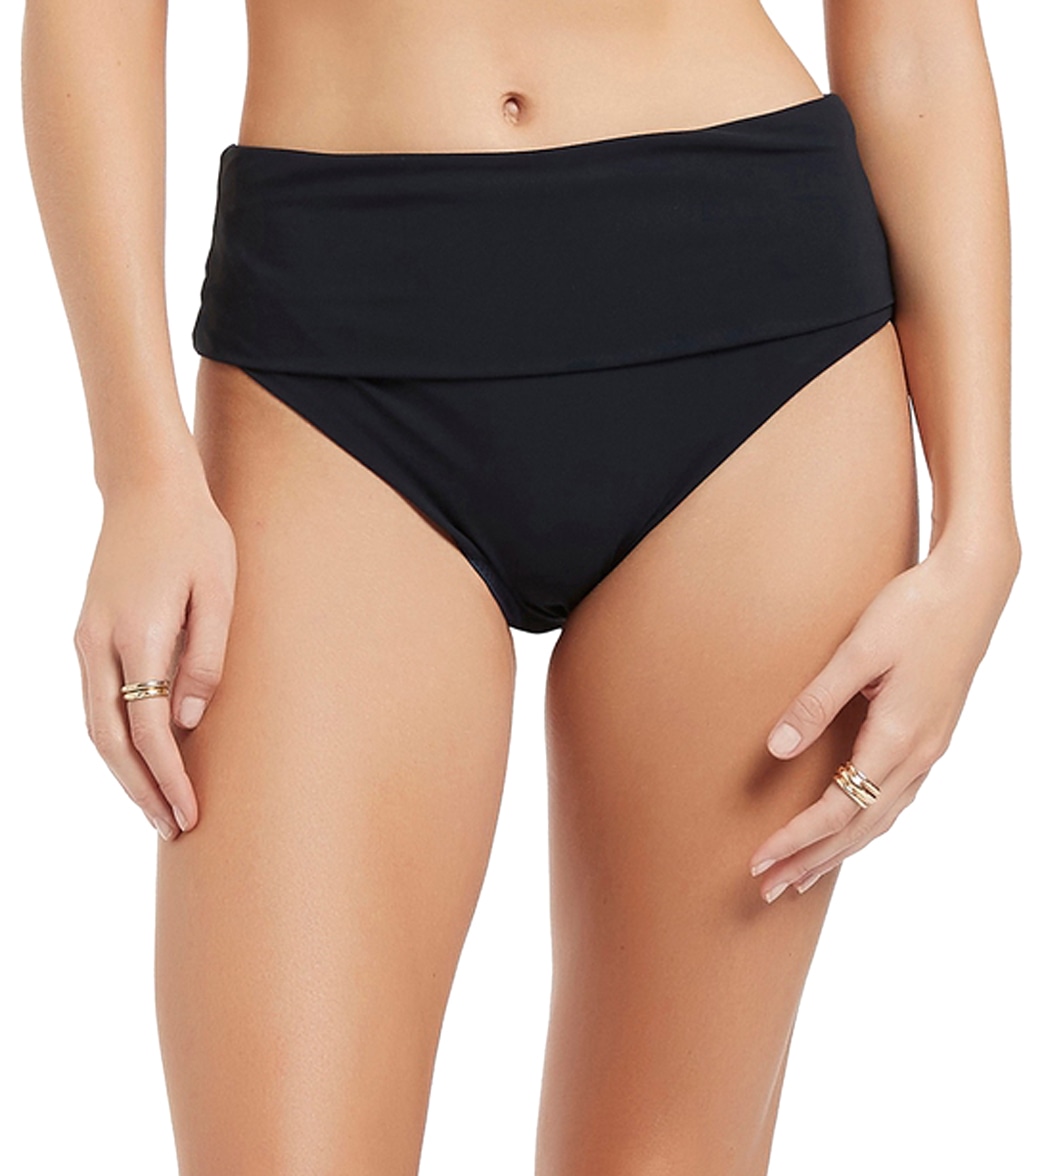 Jets Swimwear Australia Women's Jetset Fold Down Bikini Bottom - Black 10 - Swimoutlet.com